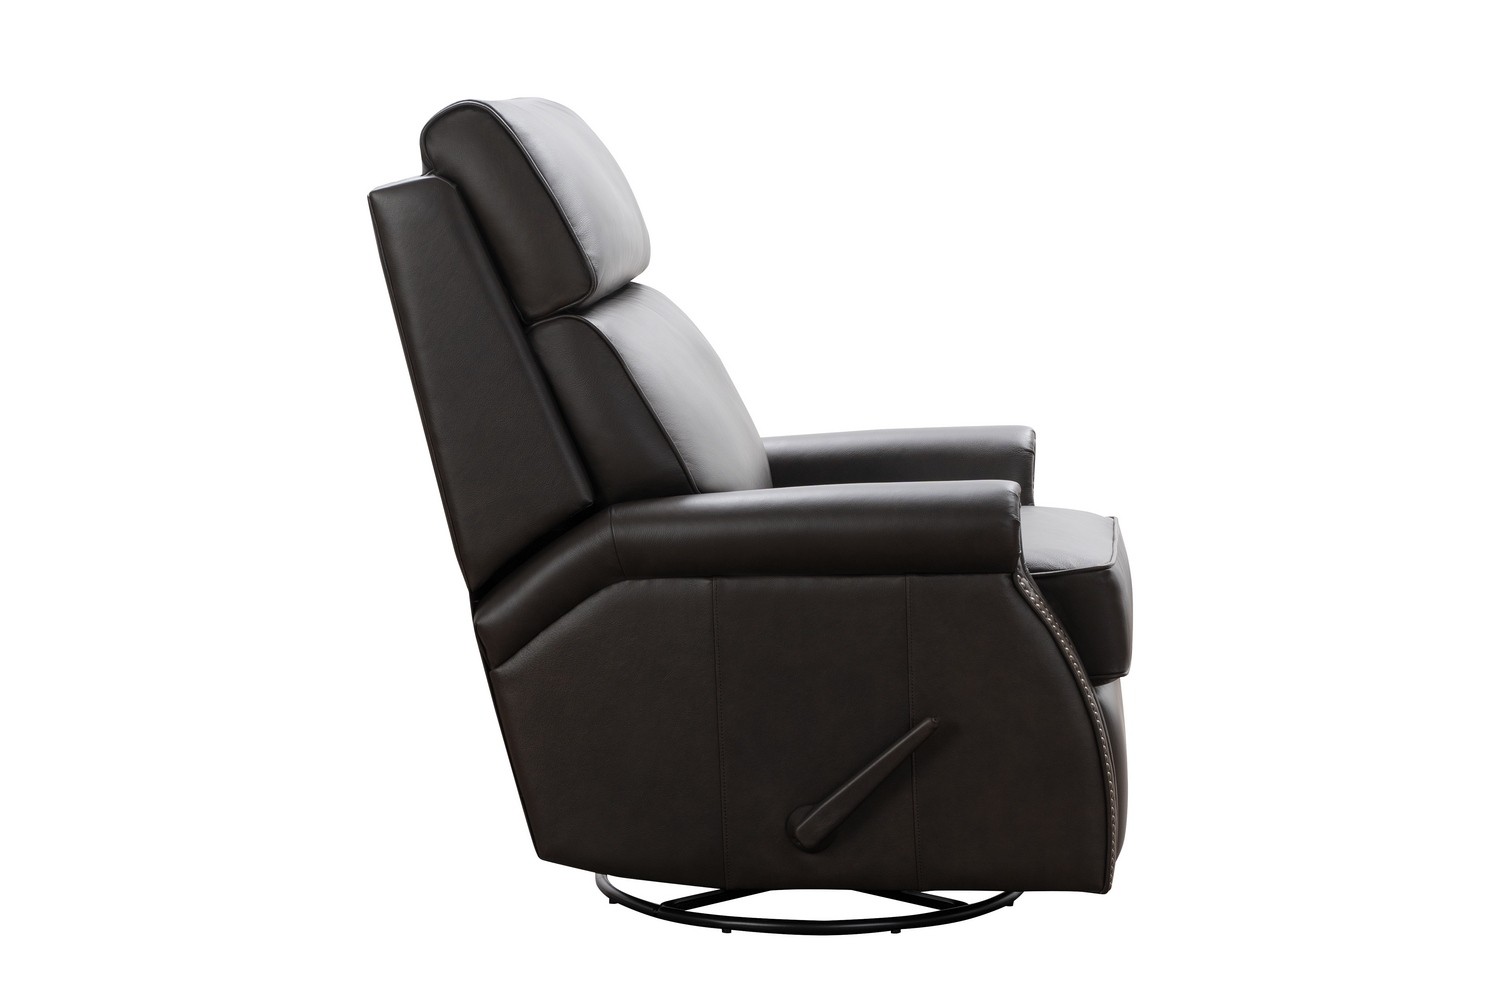 Barcalounger Crews Swivel Glider Recliner Chair - Bennington Chestnut/All Leather